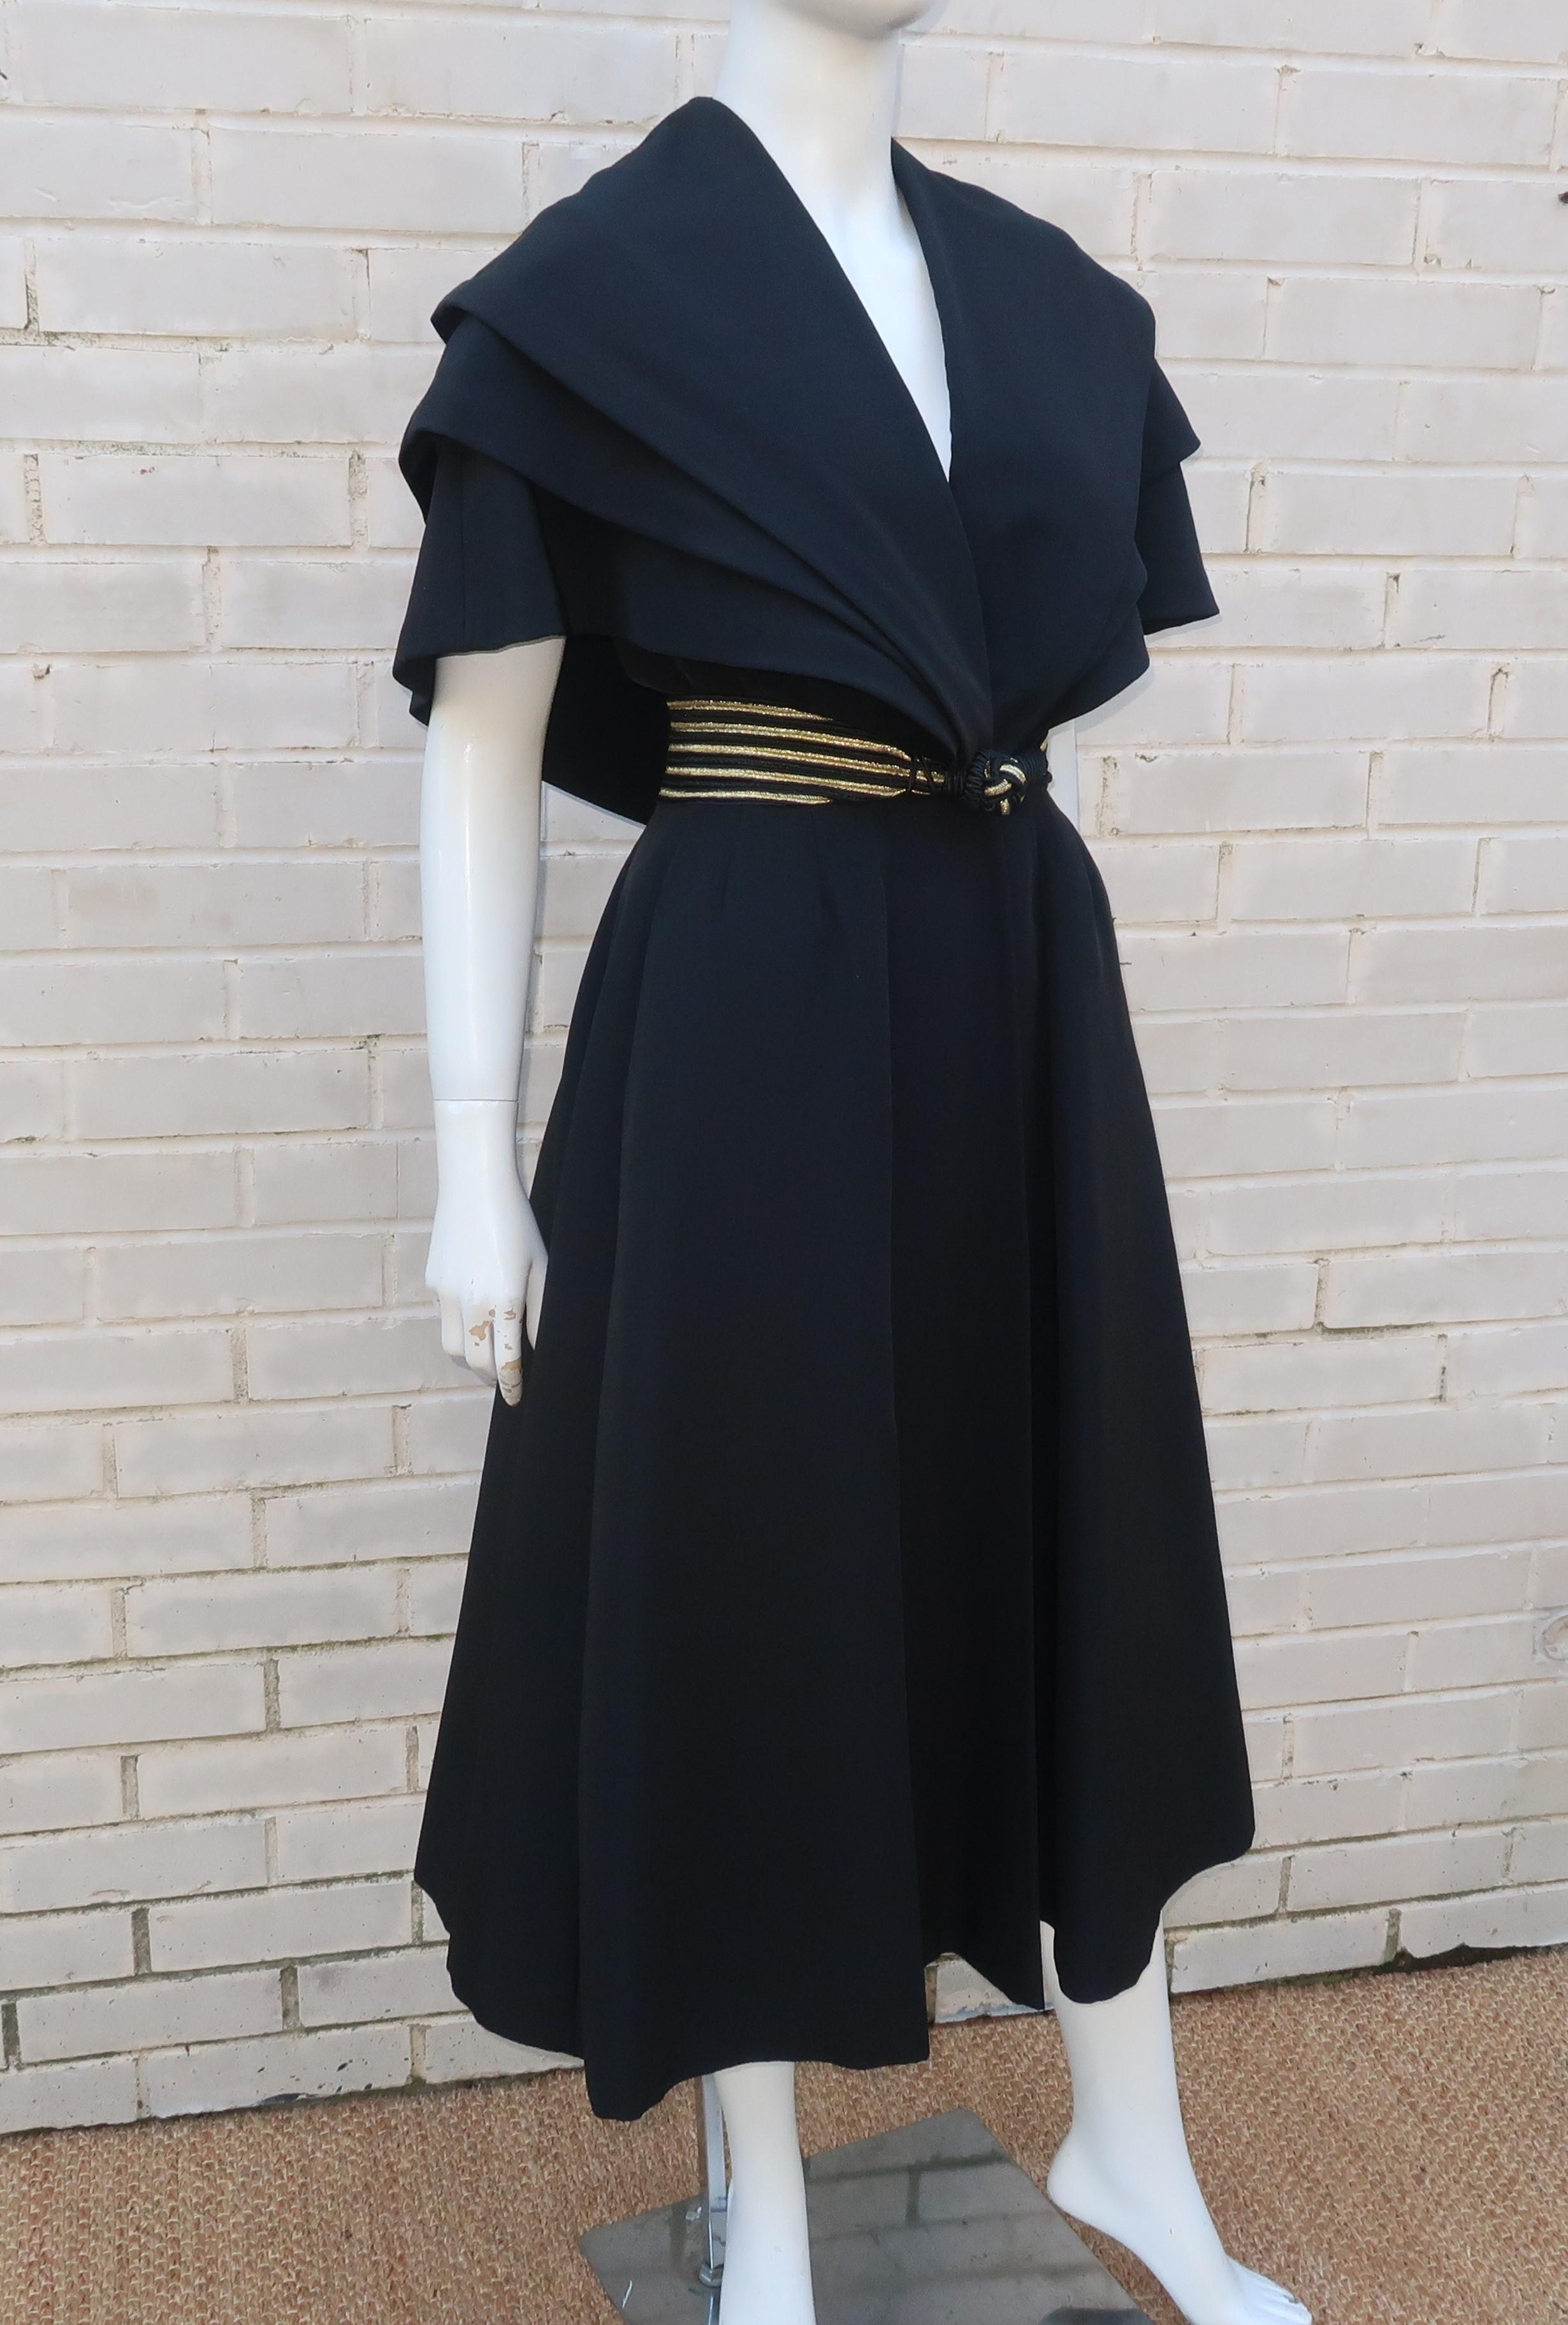 Bonwit Teller 'New Look' Black Silk Faille Evening Coat Dress, C.1950 7